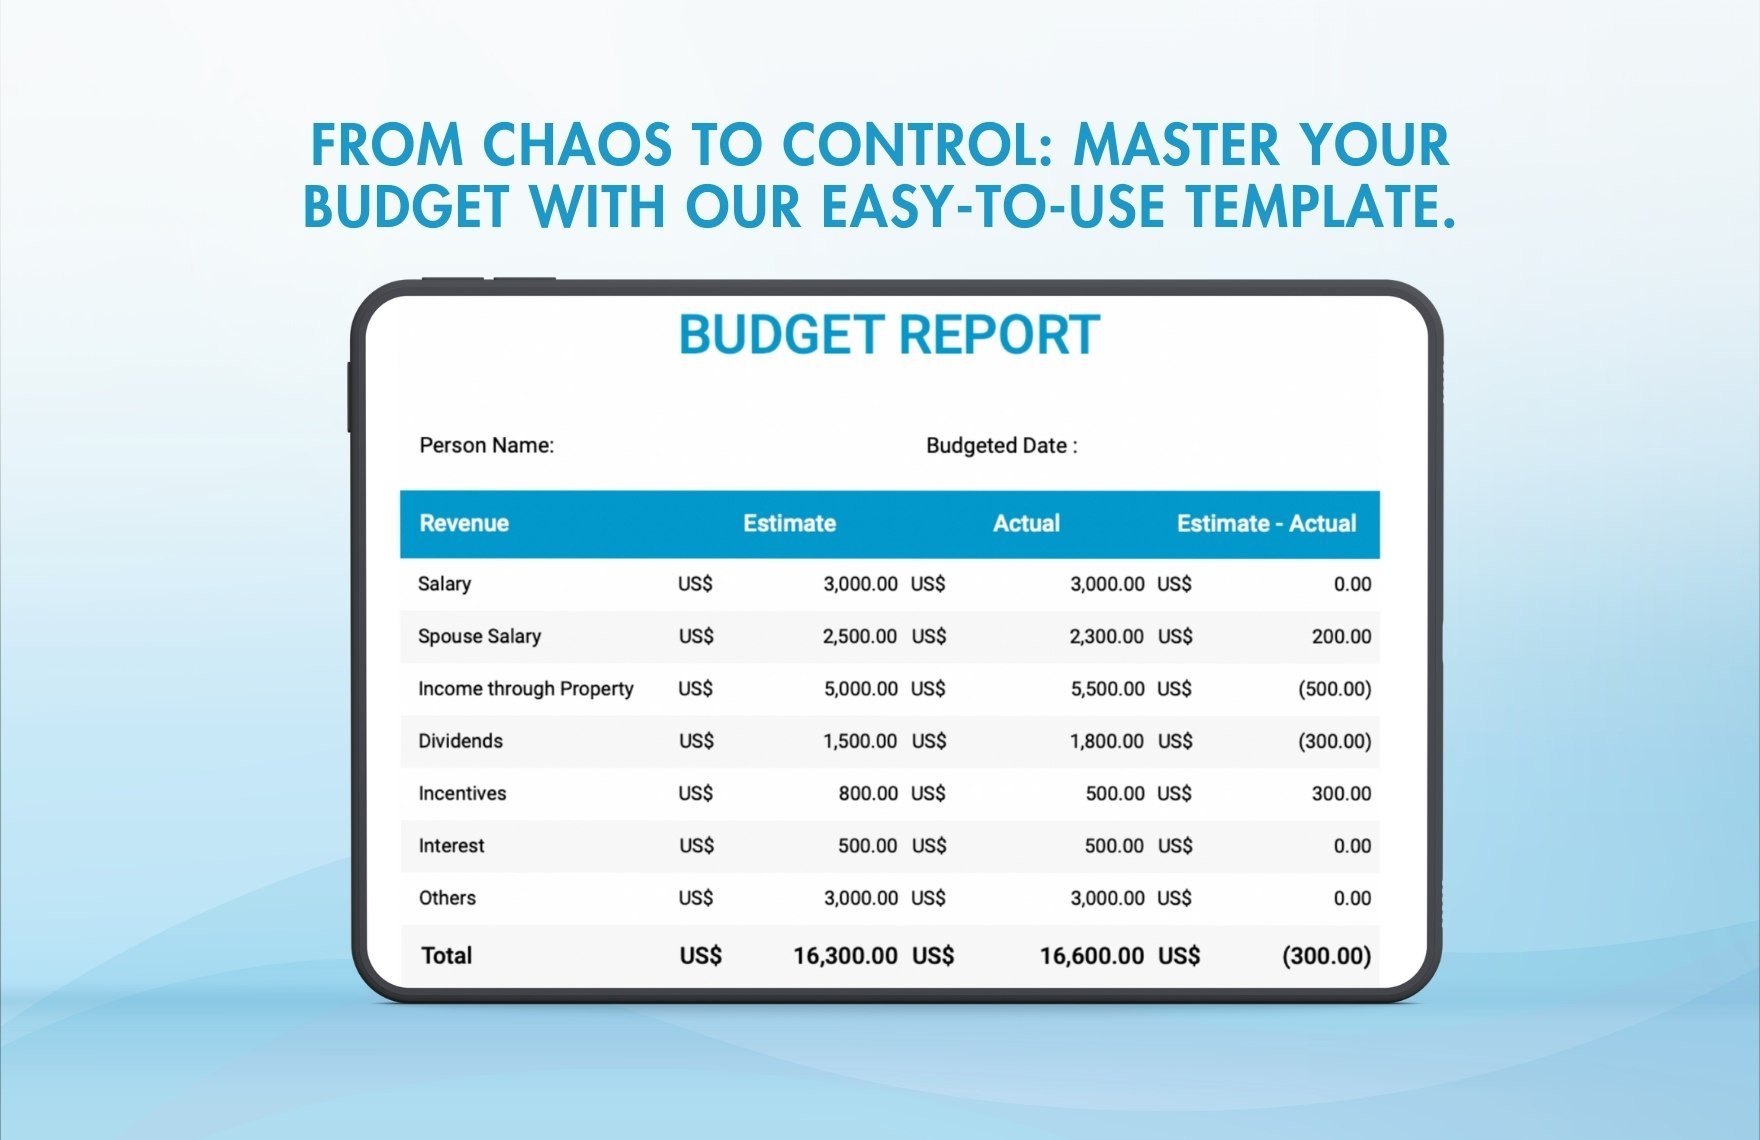 Sample Budget Report Template